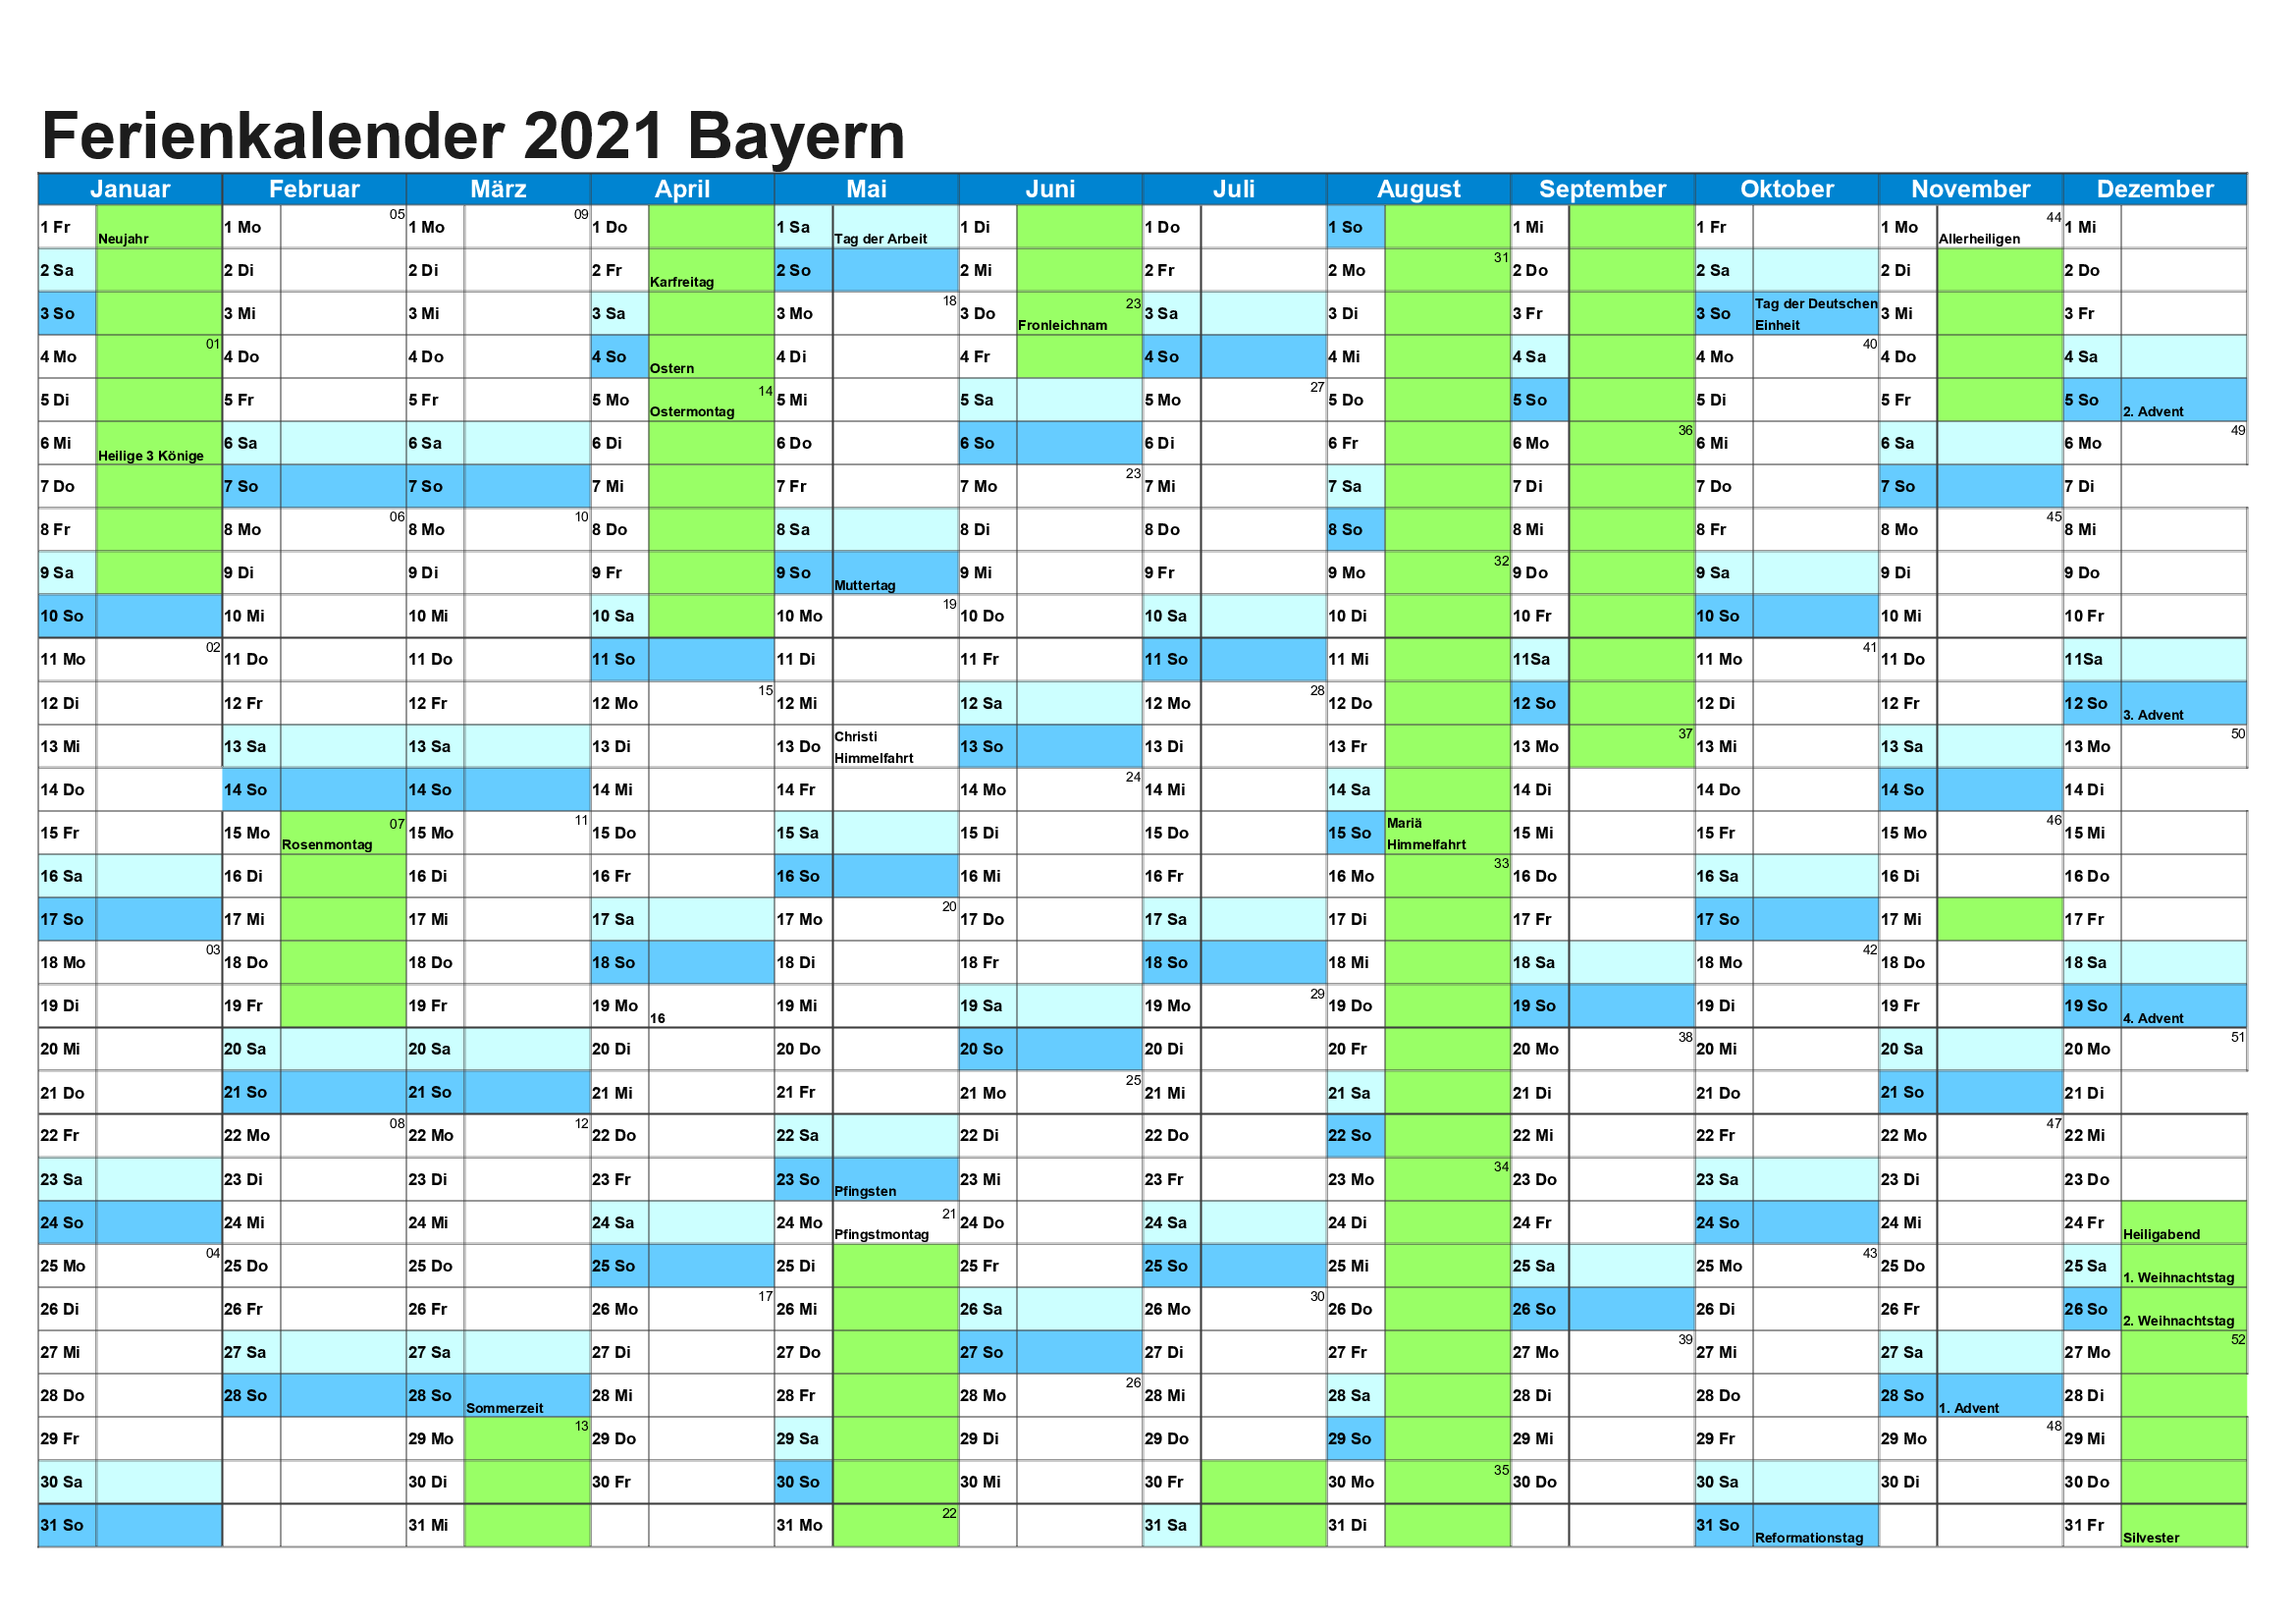 Feiertagen 2021 Bavaria Kalender